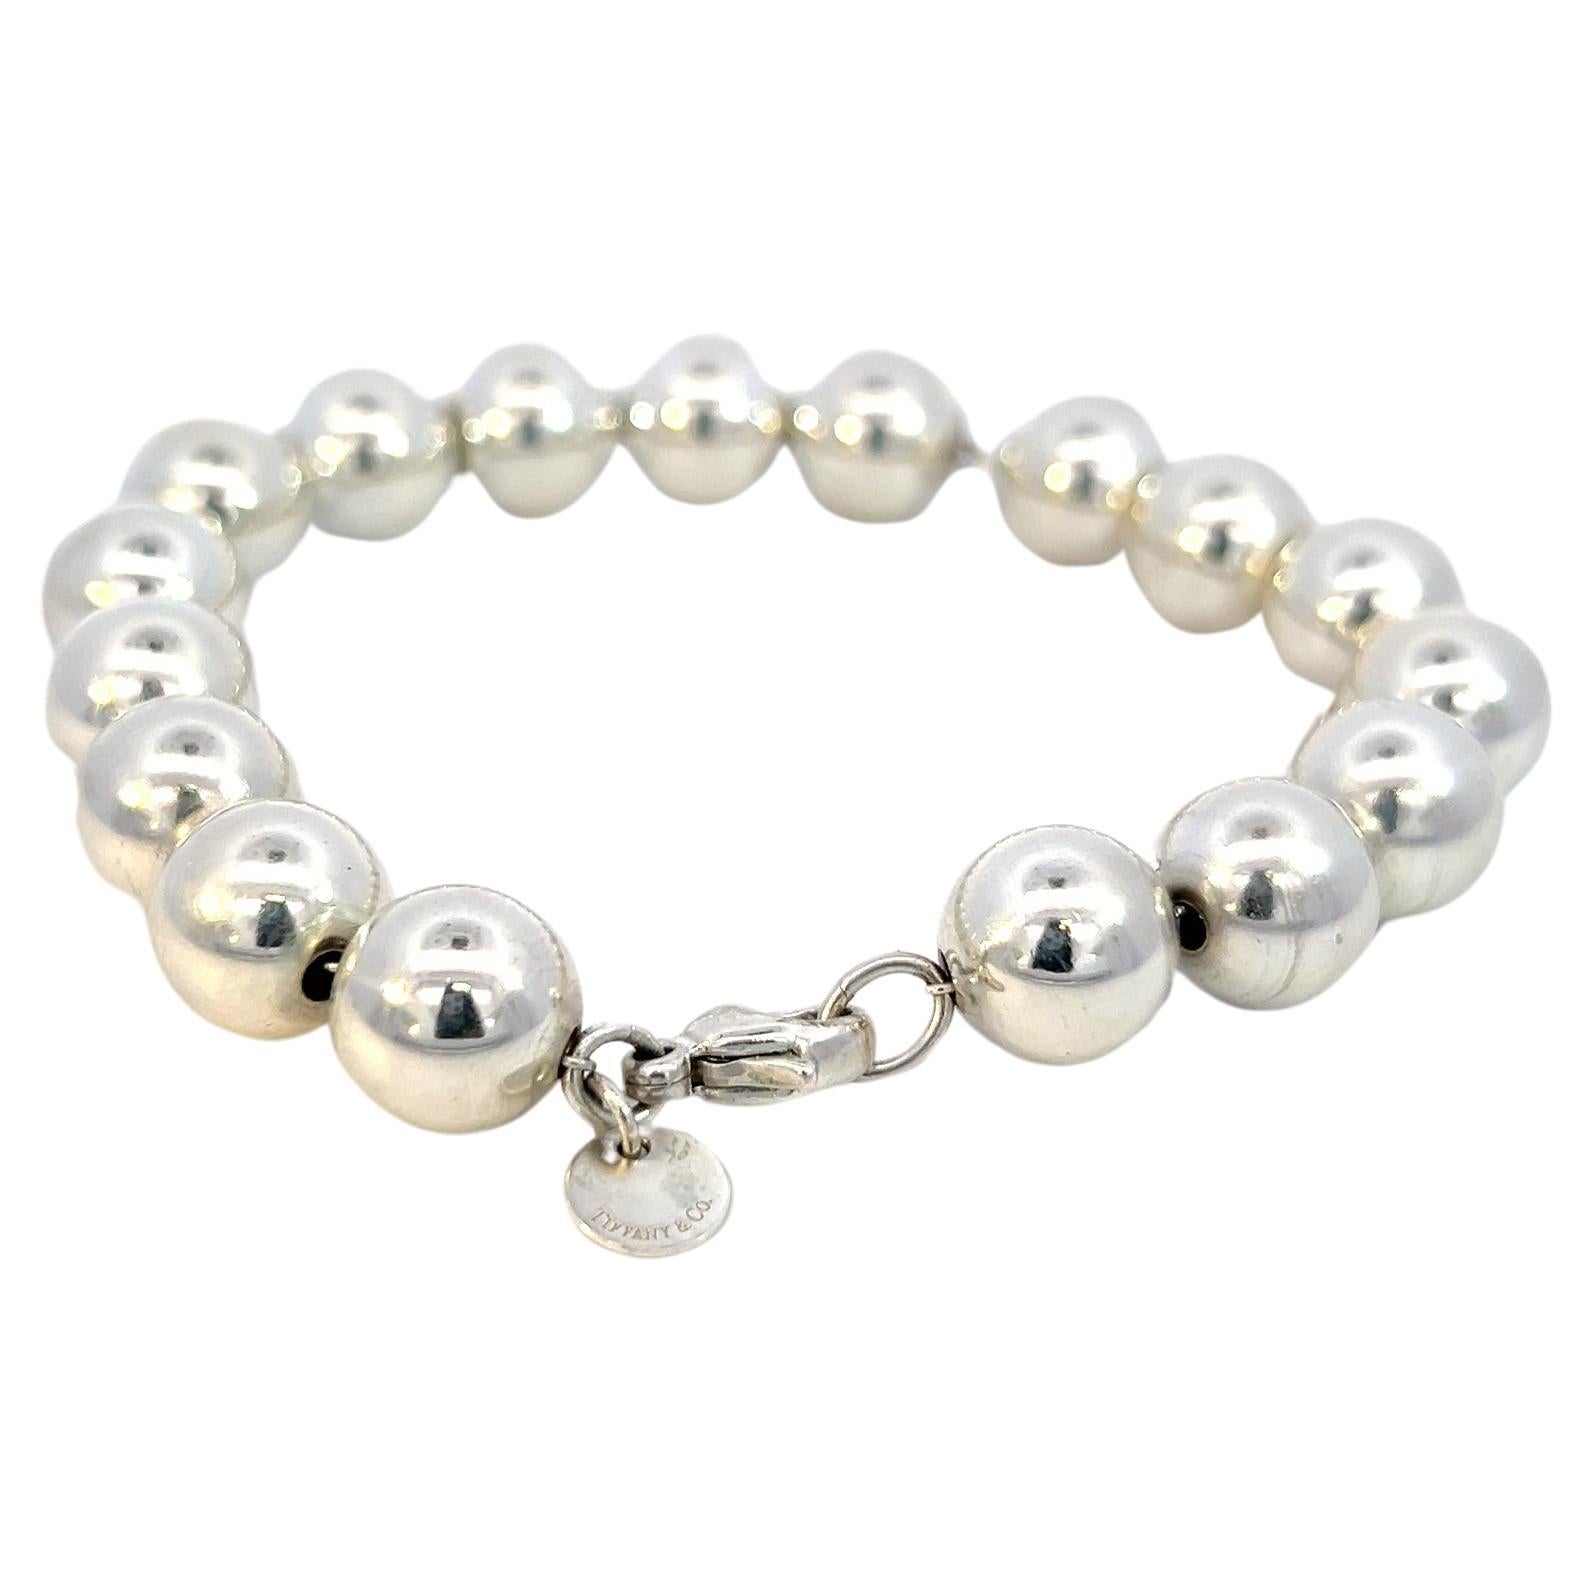 Tiffany & Co Sterling Silver “I LOVE YOU” Round Tag Mini Bead Bracelet 7” |  eBay